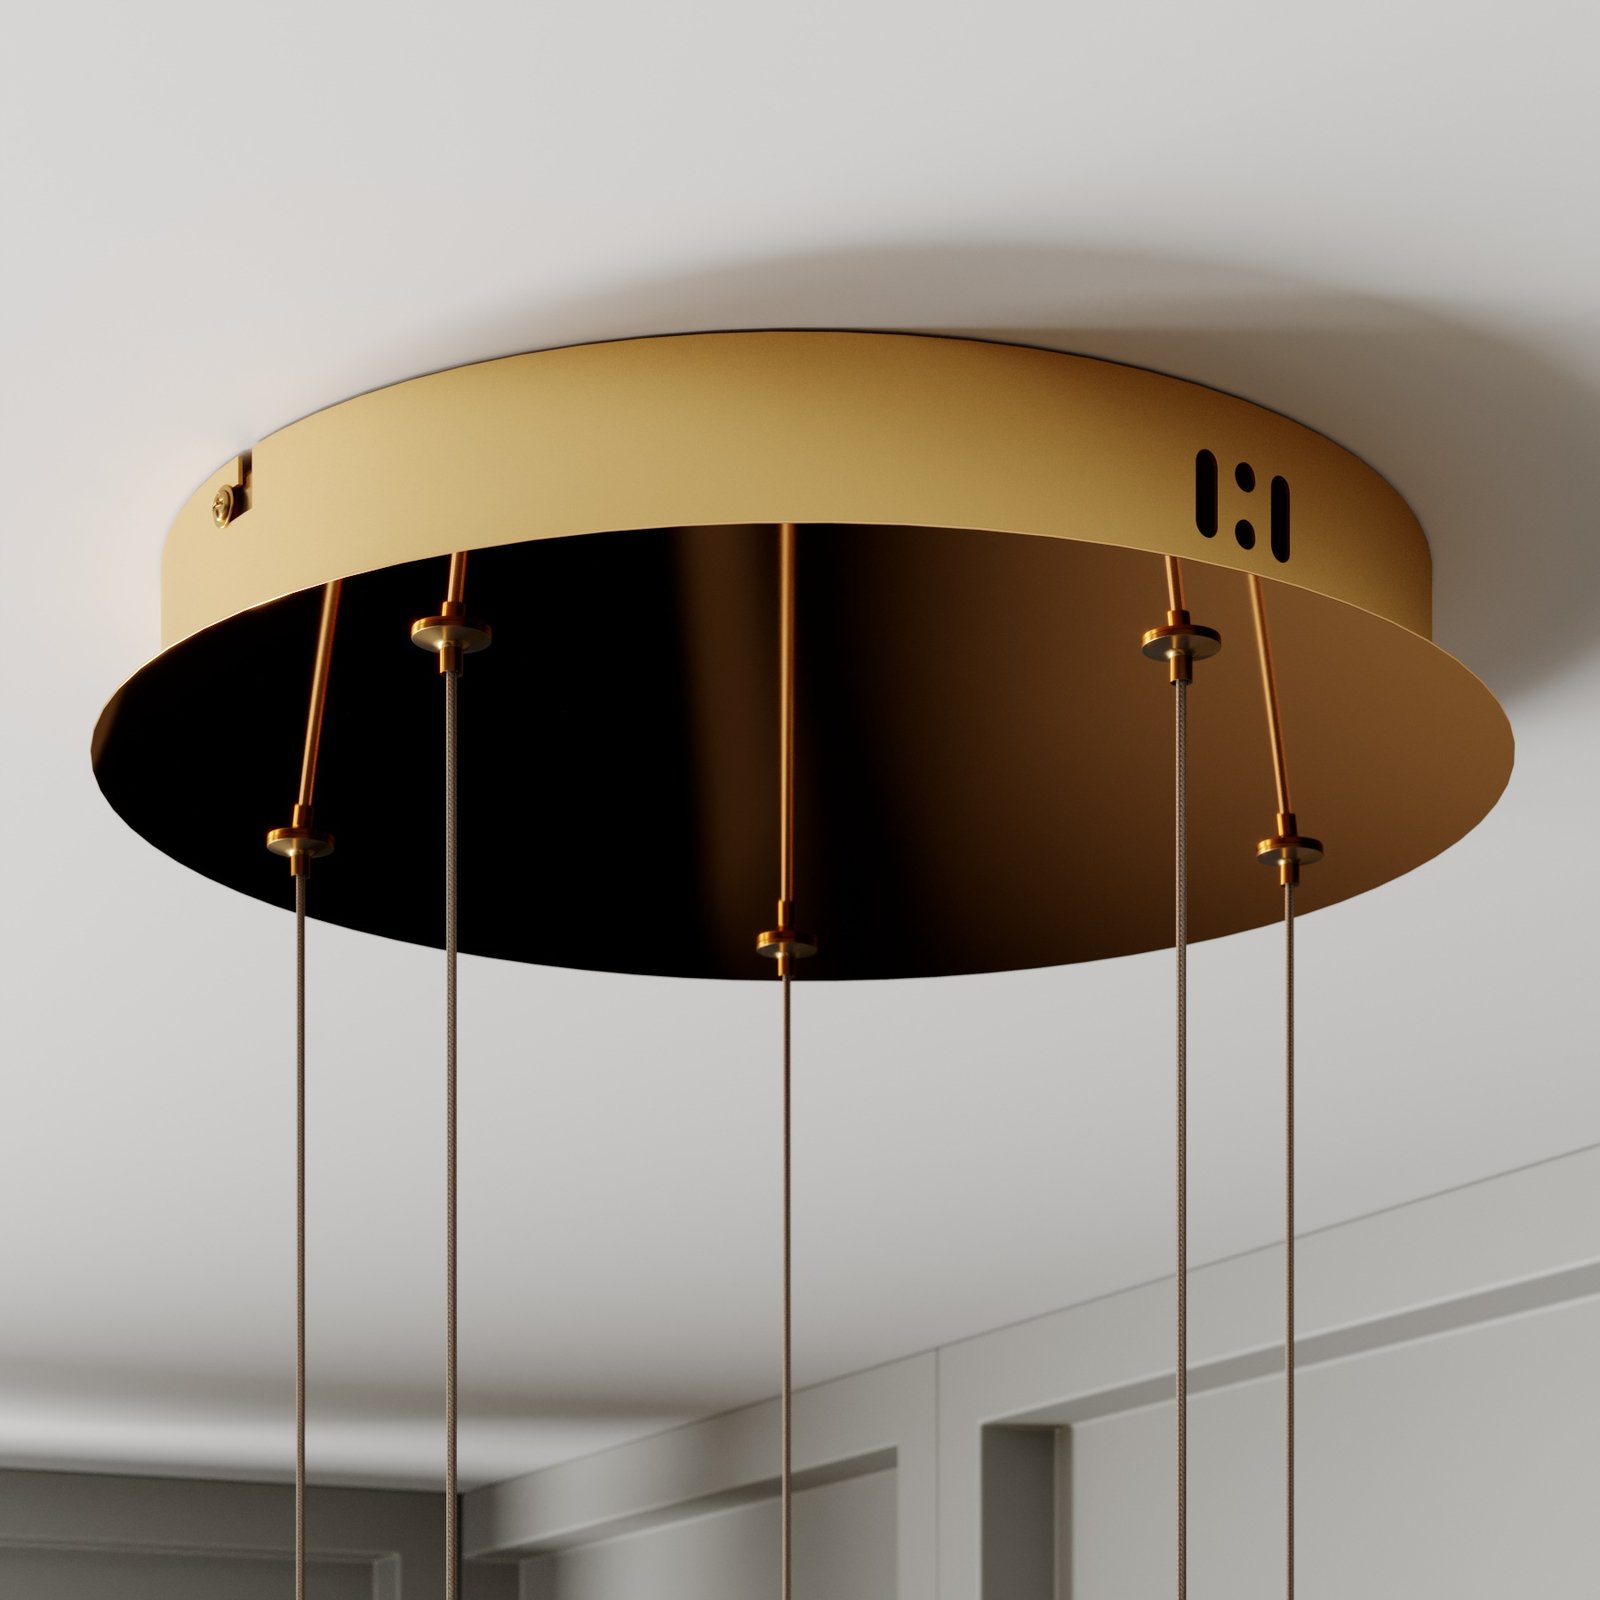 LED hanglamp Hayley, 5 lampjes, rond, goud